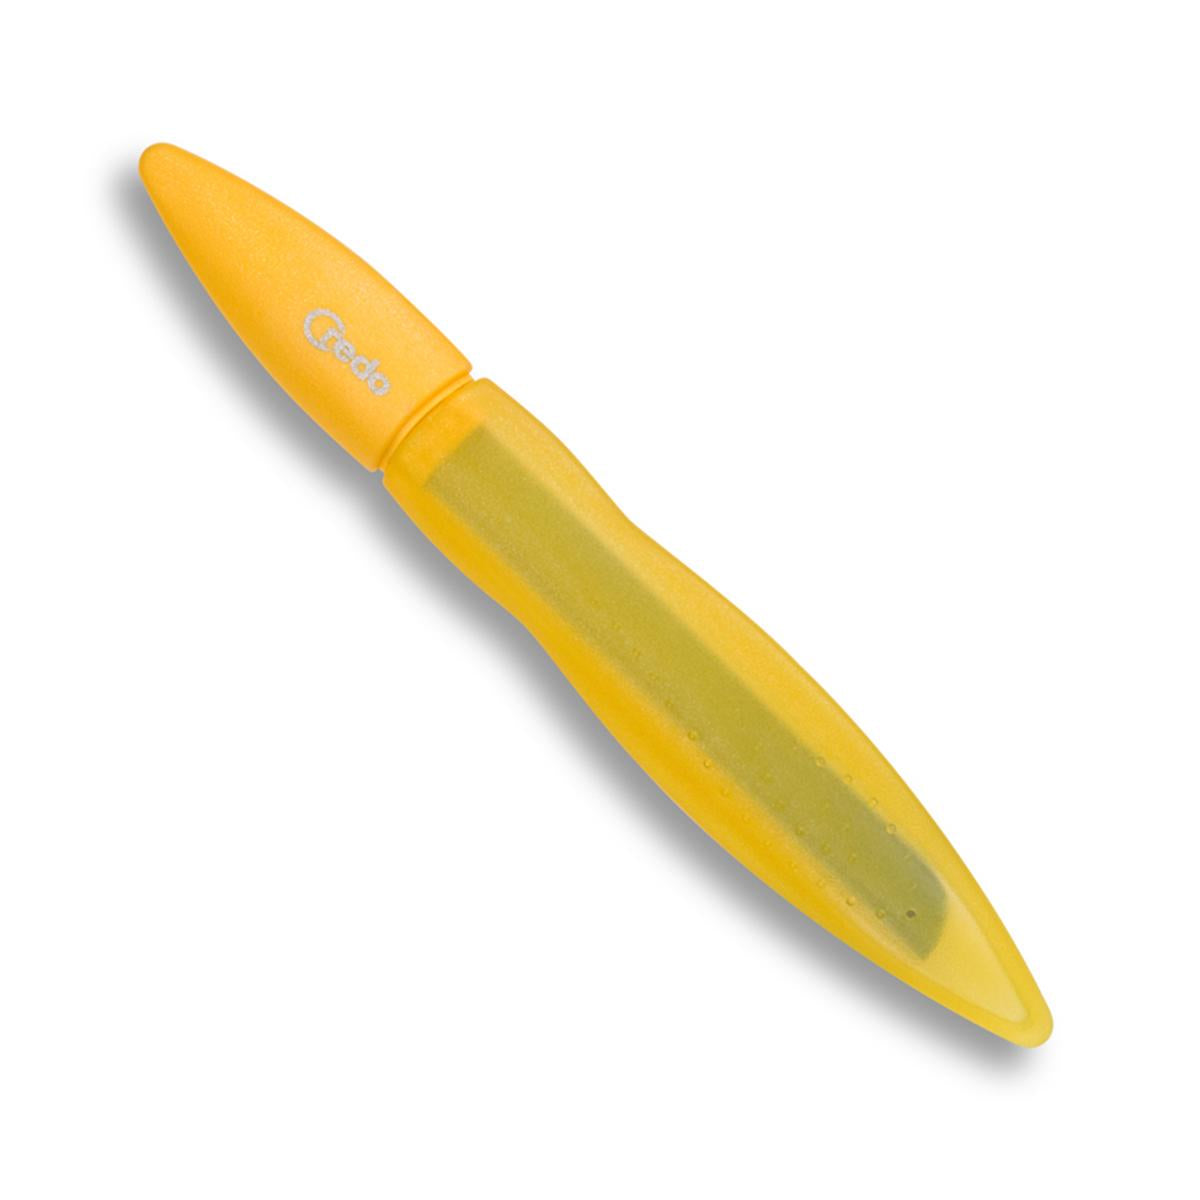 Primary image of Yellow Pop Art Ceramic Nail File